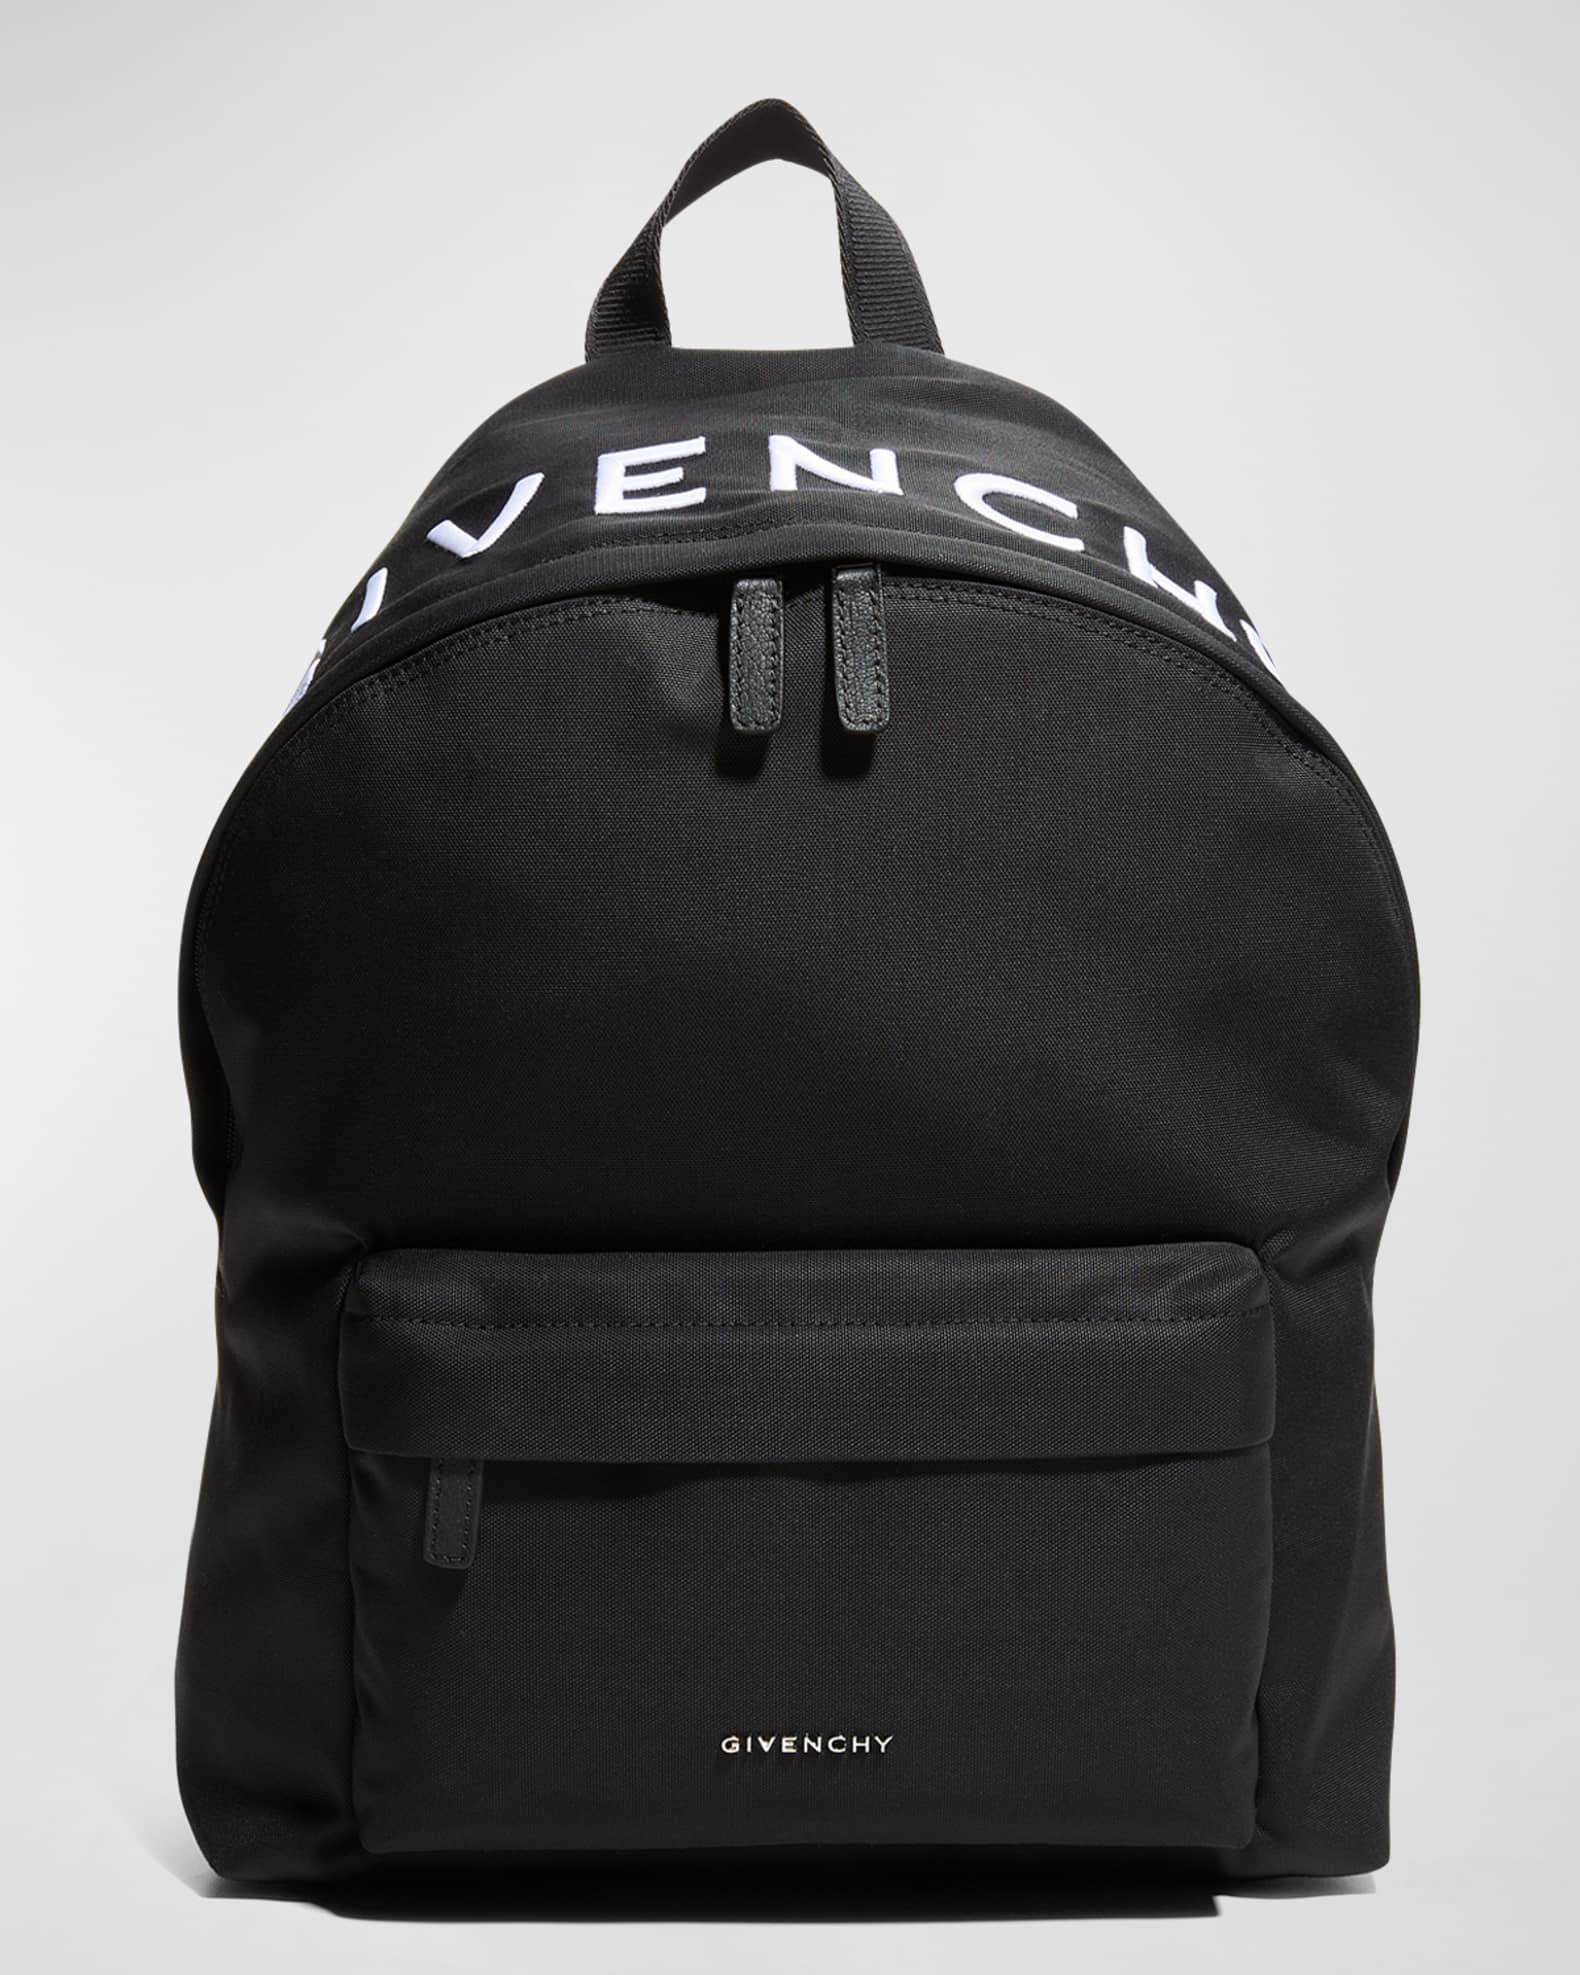 Givenchy Classic Messenger Bag in Black for Men